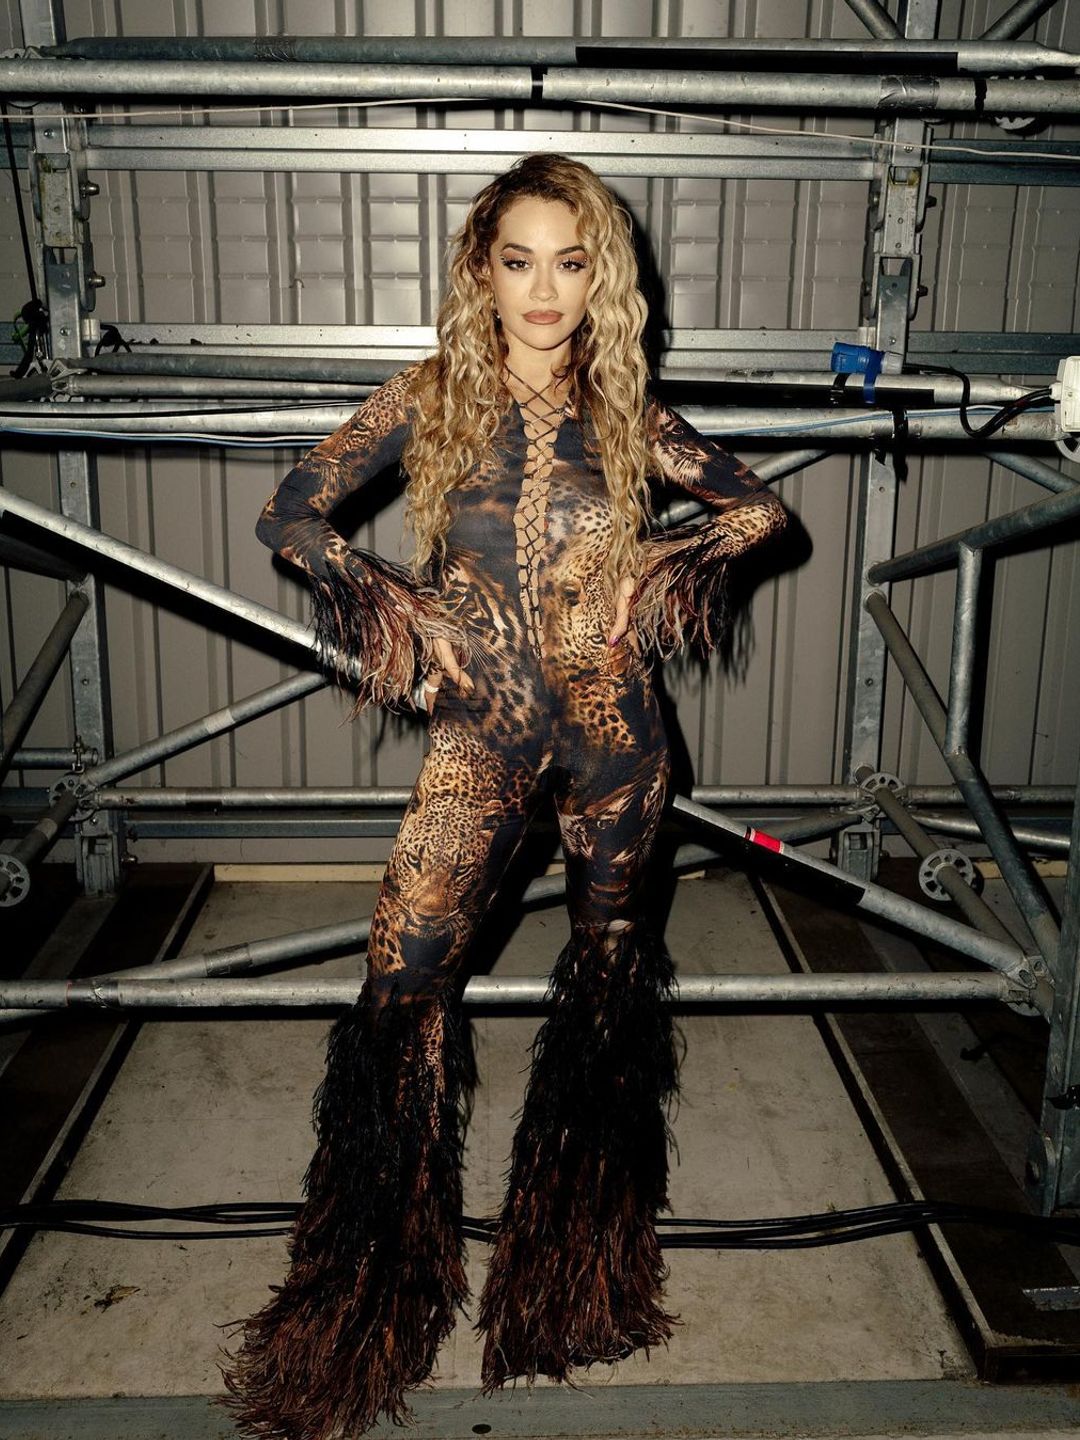 Rita Ora's catsuit hailed from Roberto Cavalli